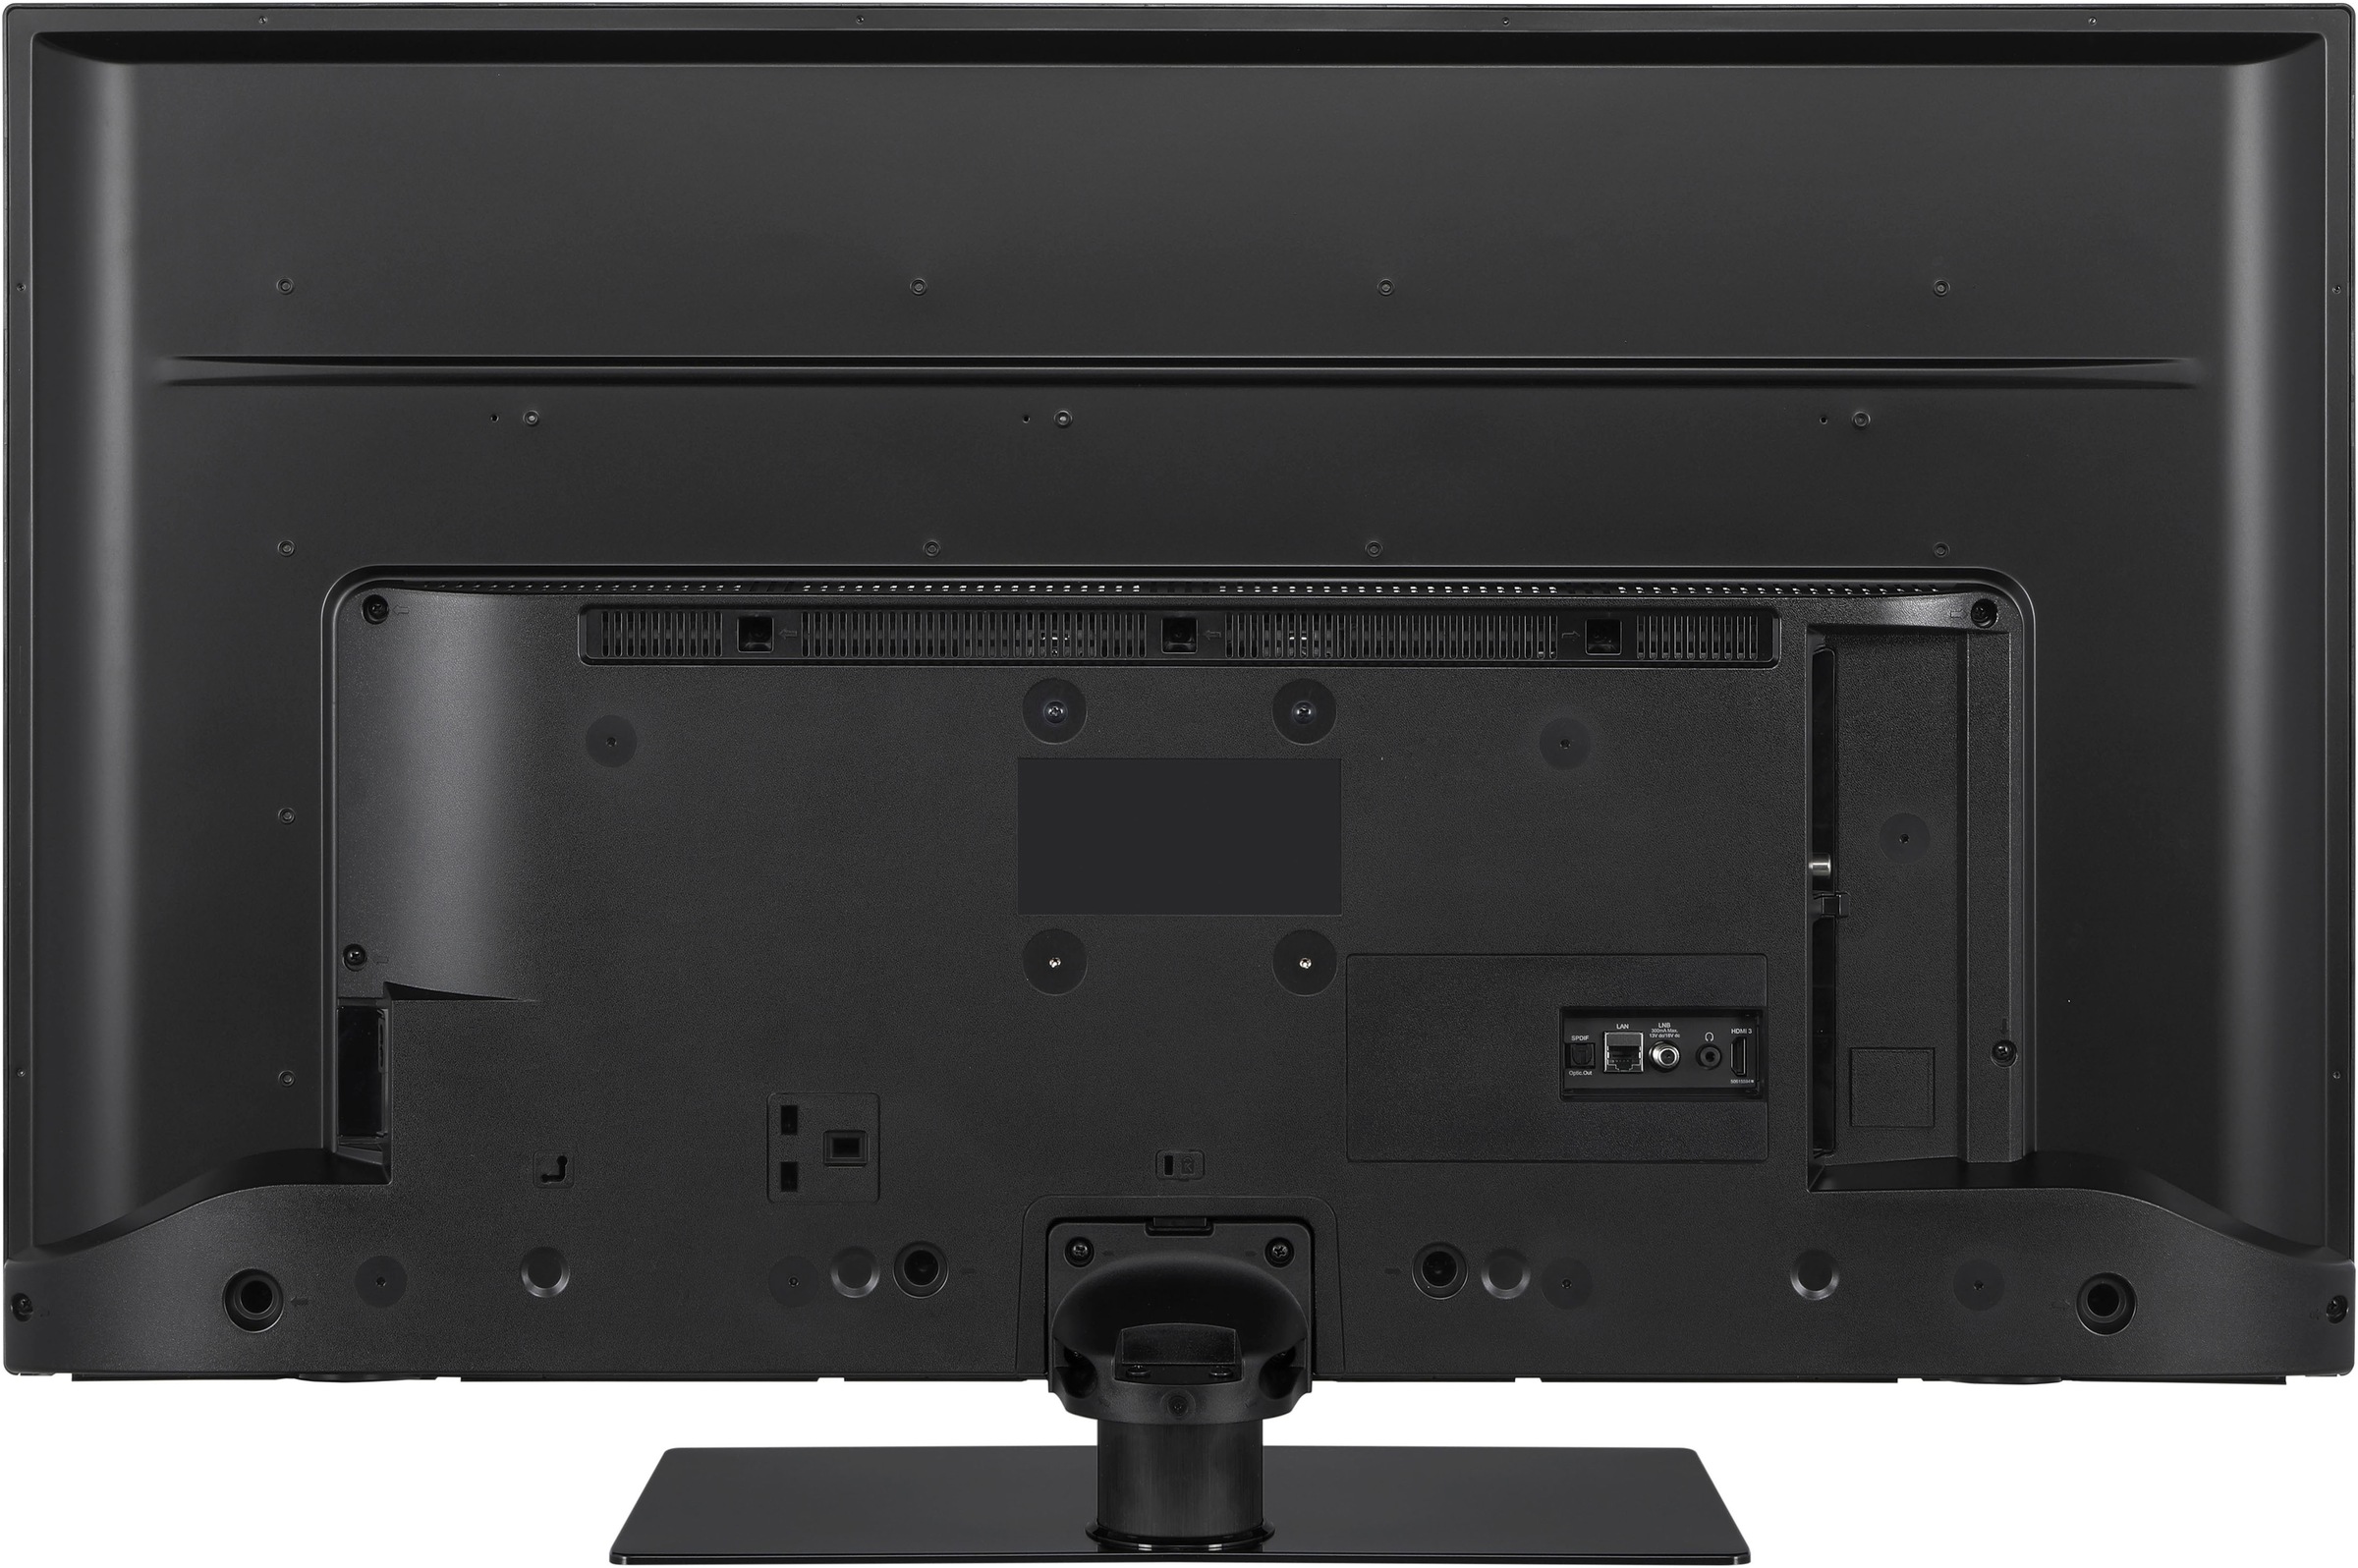 Panasonic LED-Fernseher »TX-55MX700E«, 139 cm/55 Zoll, 4K Ultra HD, Google TV